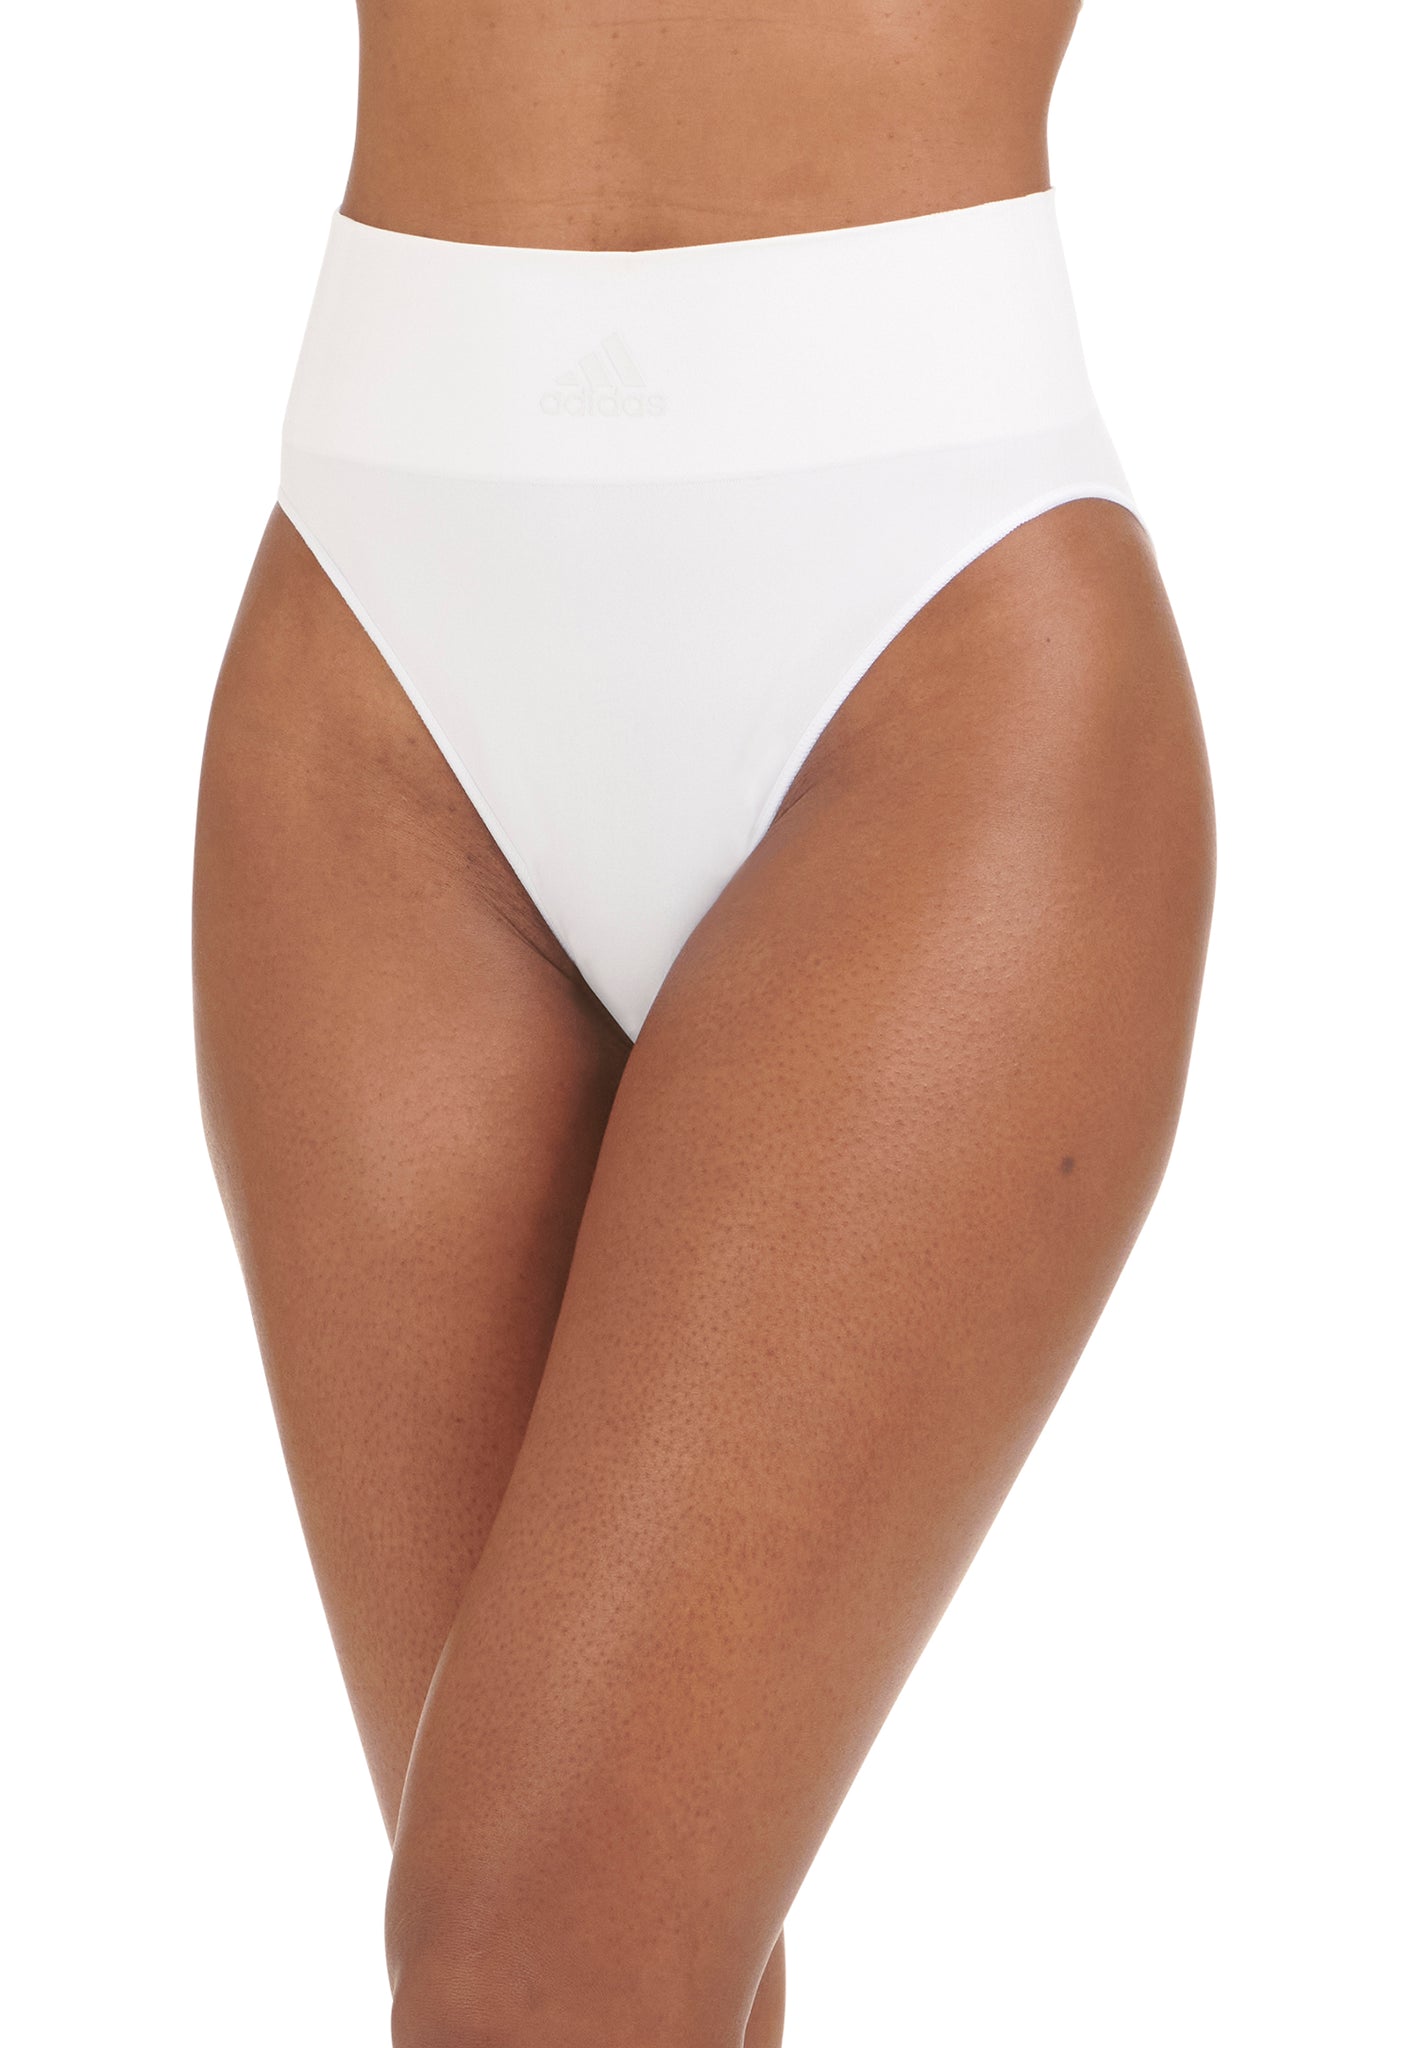 Adidas Women's Comfort Flex Scoop Cotton Bikini Set